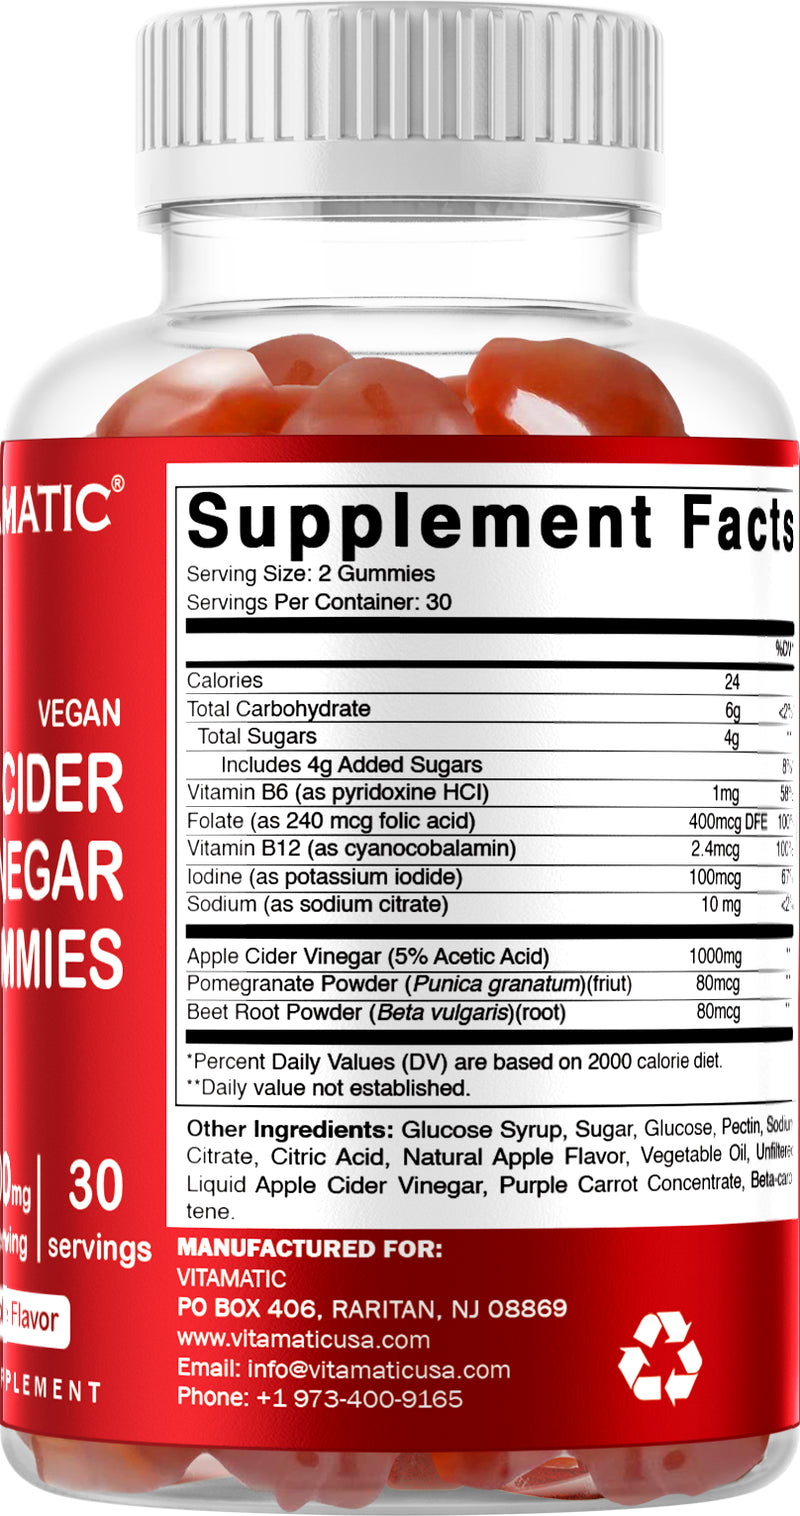 Vitamatic Apple Cider Vinegar Gummies - 1000Mg per Serving - 60 Vegan Gummies - ACV Gummies for Detox, Weight Loss Support, Energy Boost, Digestion & Gut Health